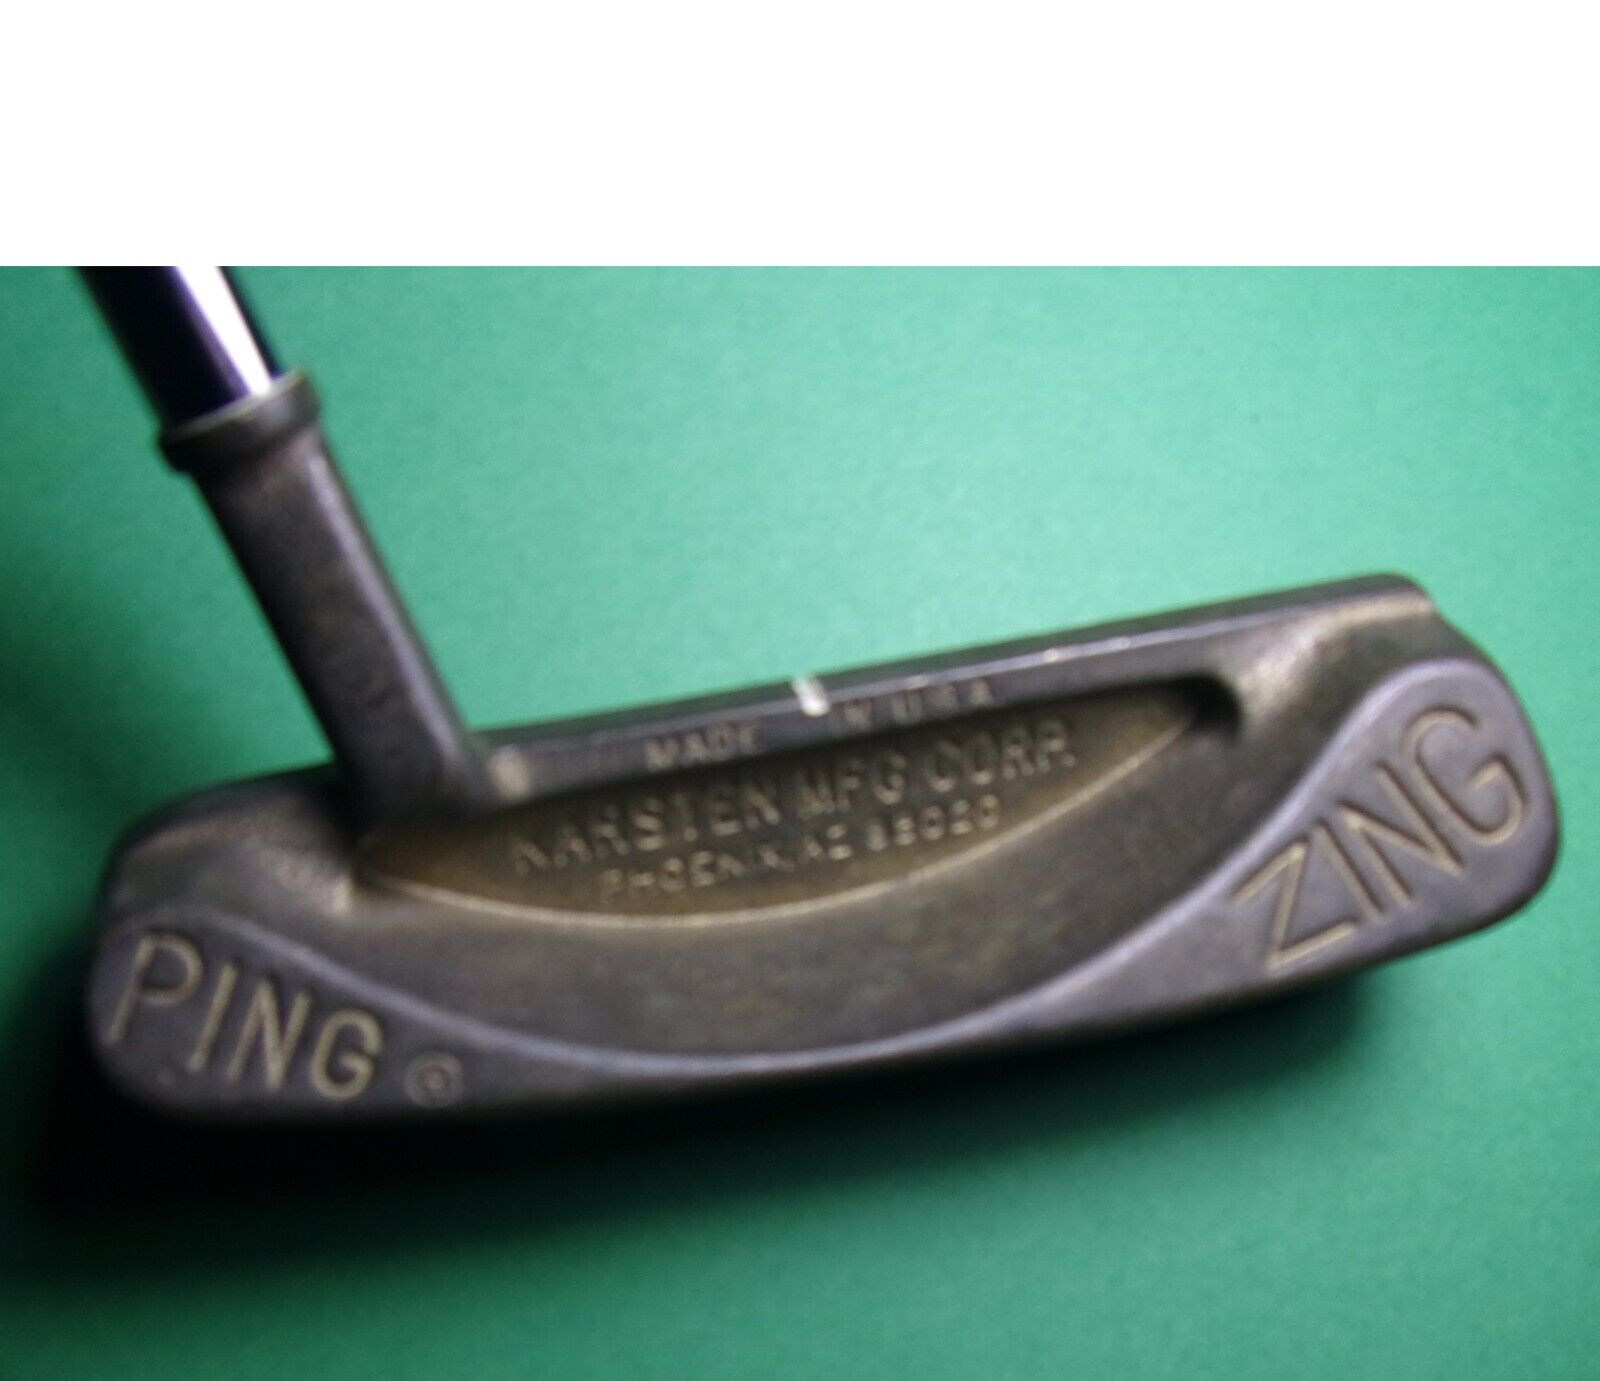 Vintage Ping Zing Karsten First PZ Golf Putter RH 36” all Original Nice 